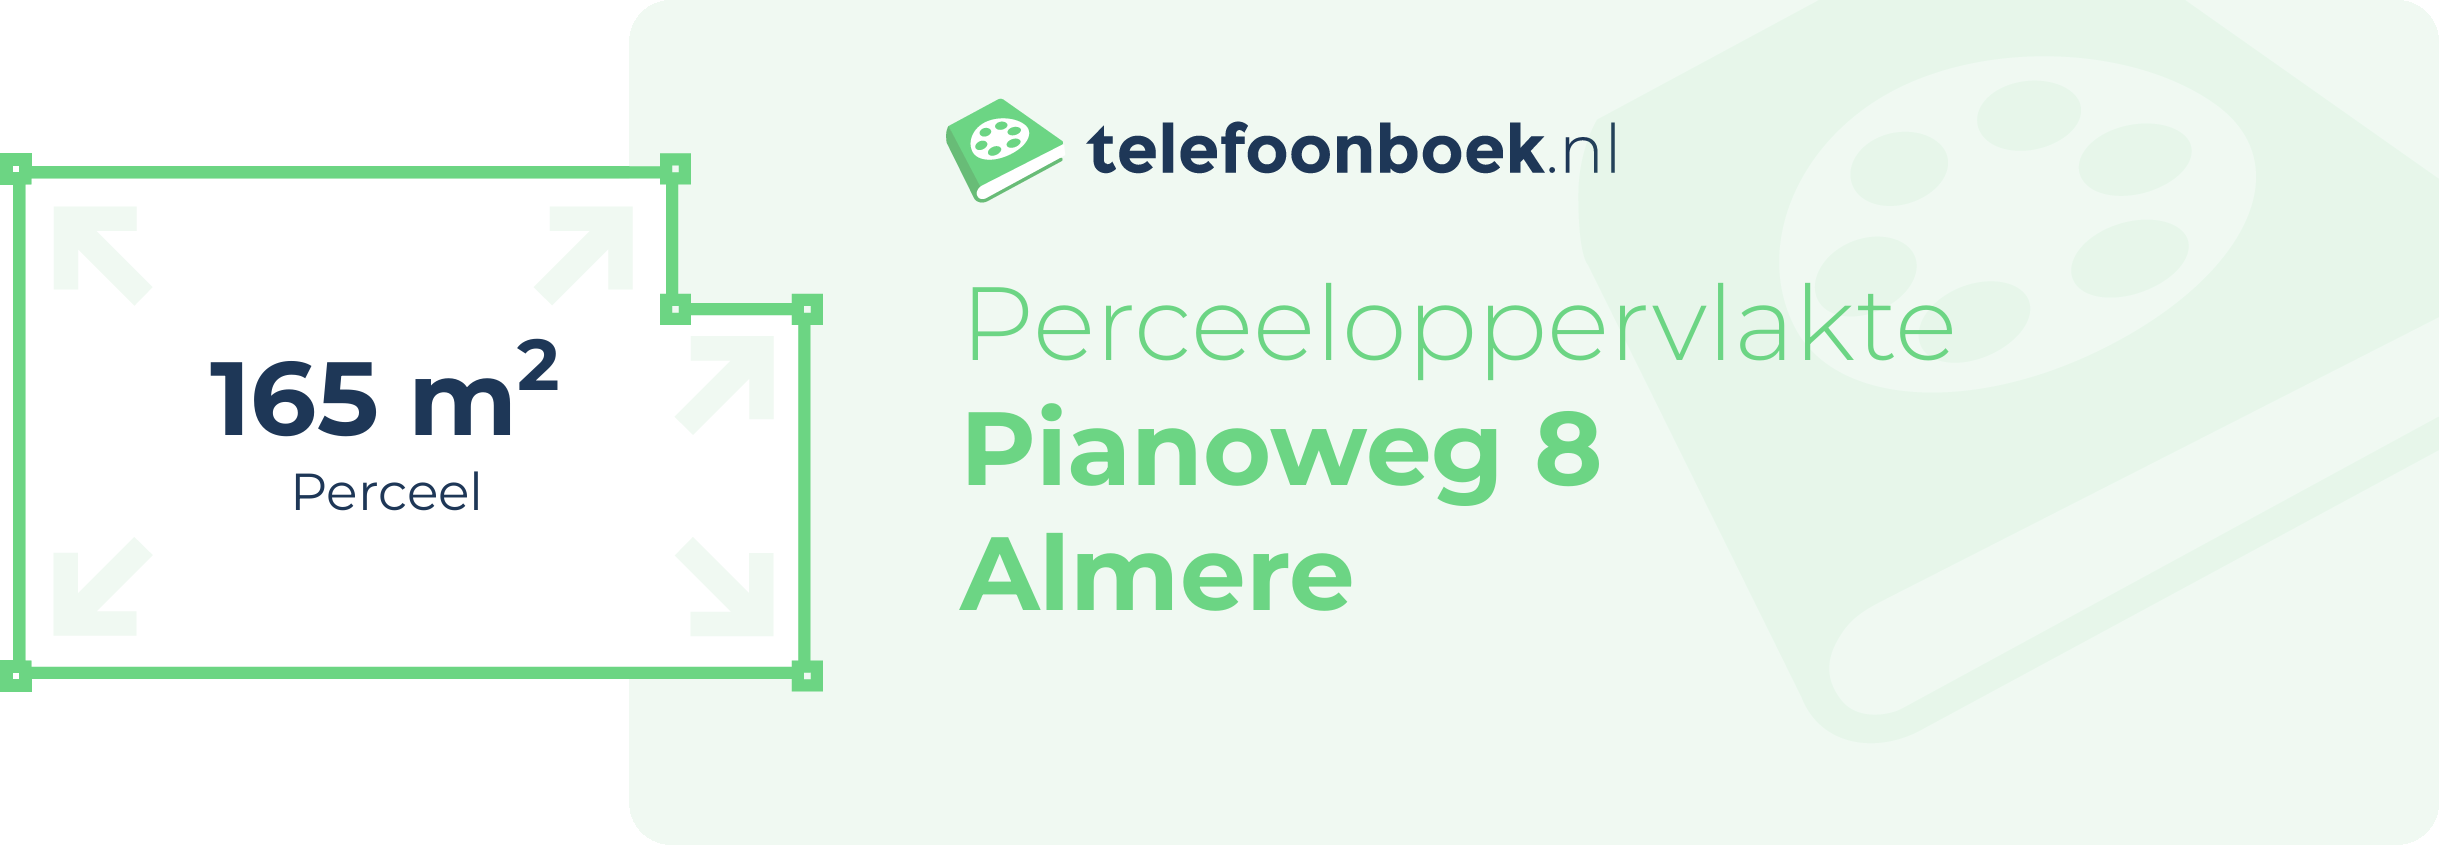 Perceeloppervlakte Pianoweg 8 Almere